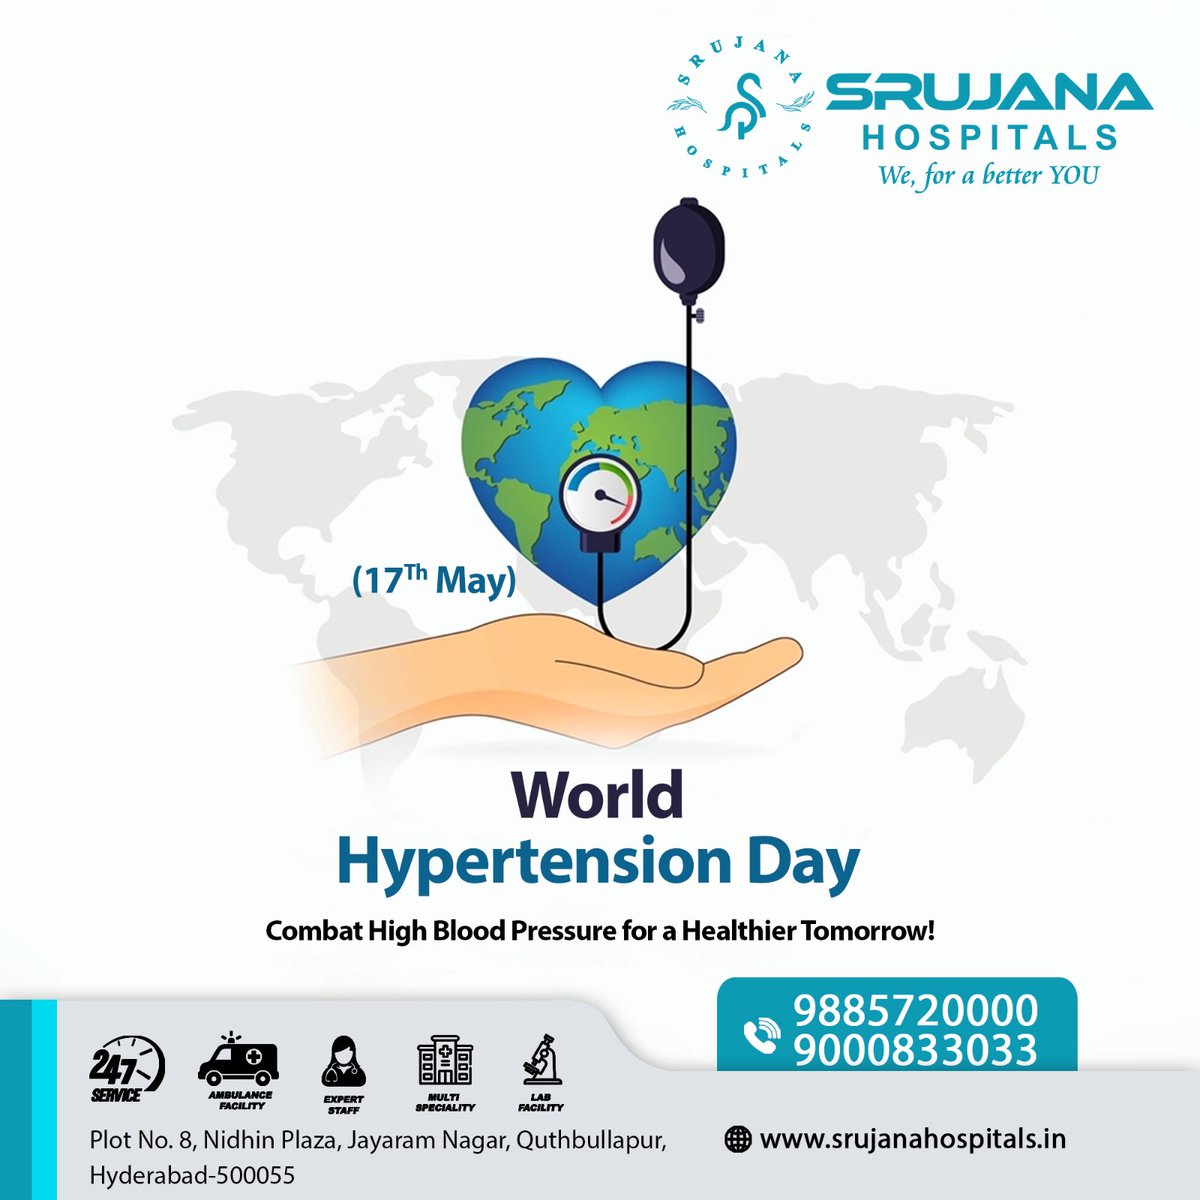 Spread awareness about hypertension and save lives. #WorldHypertensionDay #HypertensionAwareness #HeartHealth #BPControl #BloodPressureMatters #HealthyLiving #CheckYourBP #FightHypertension #Srujanahospitals